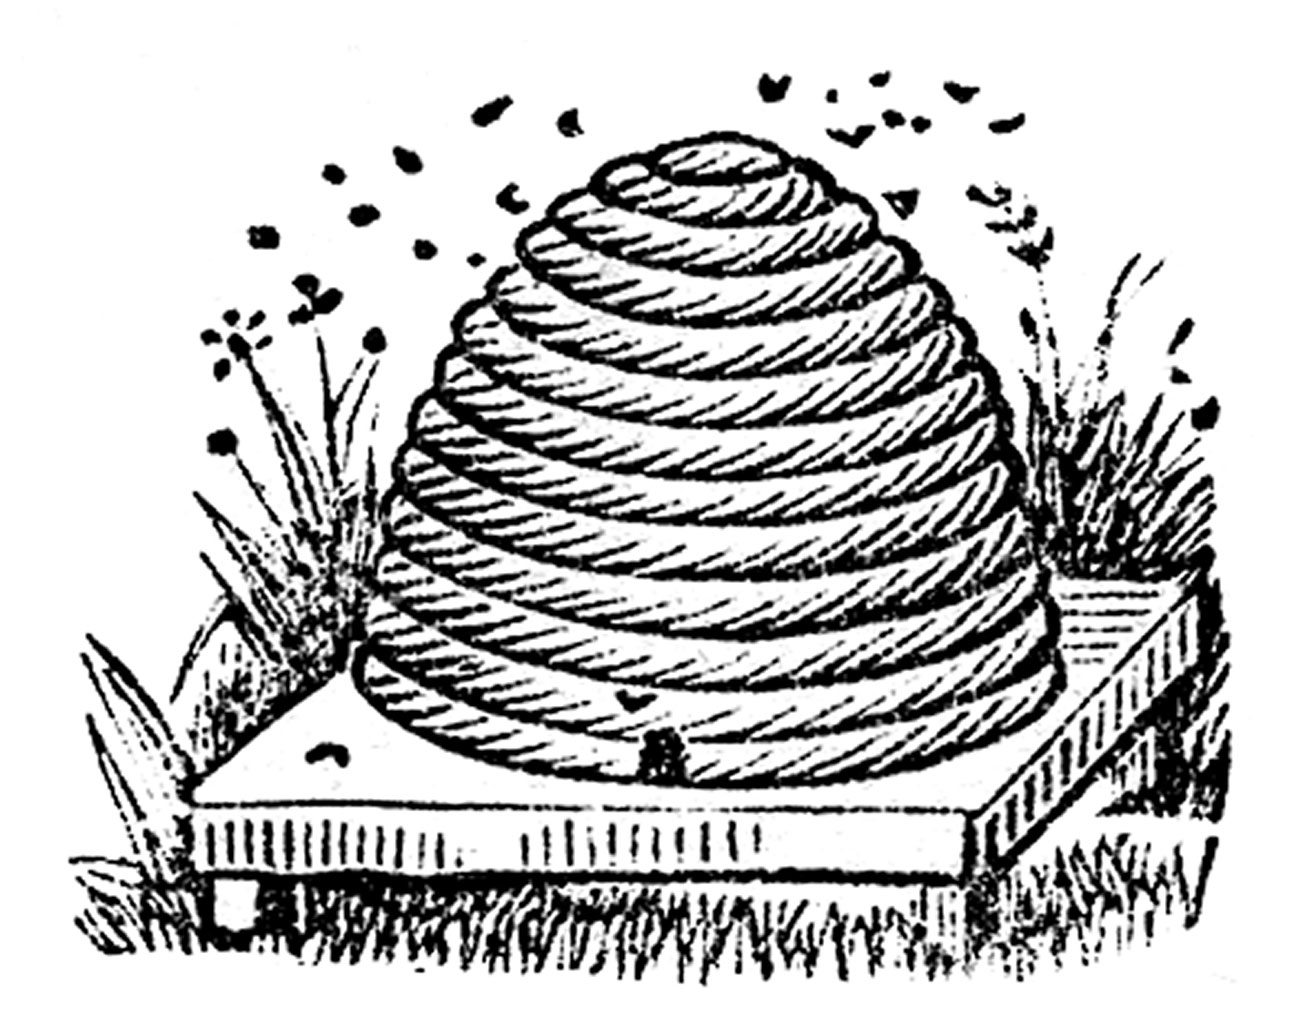 beehive illustration